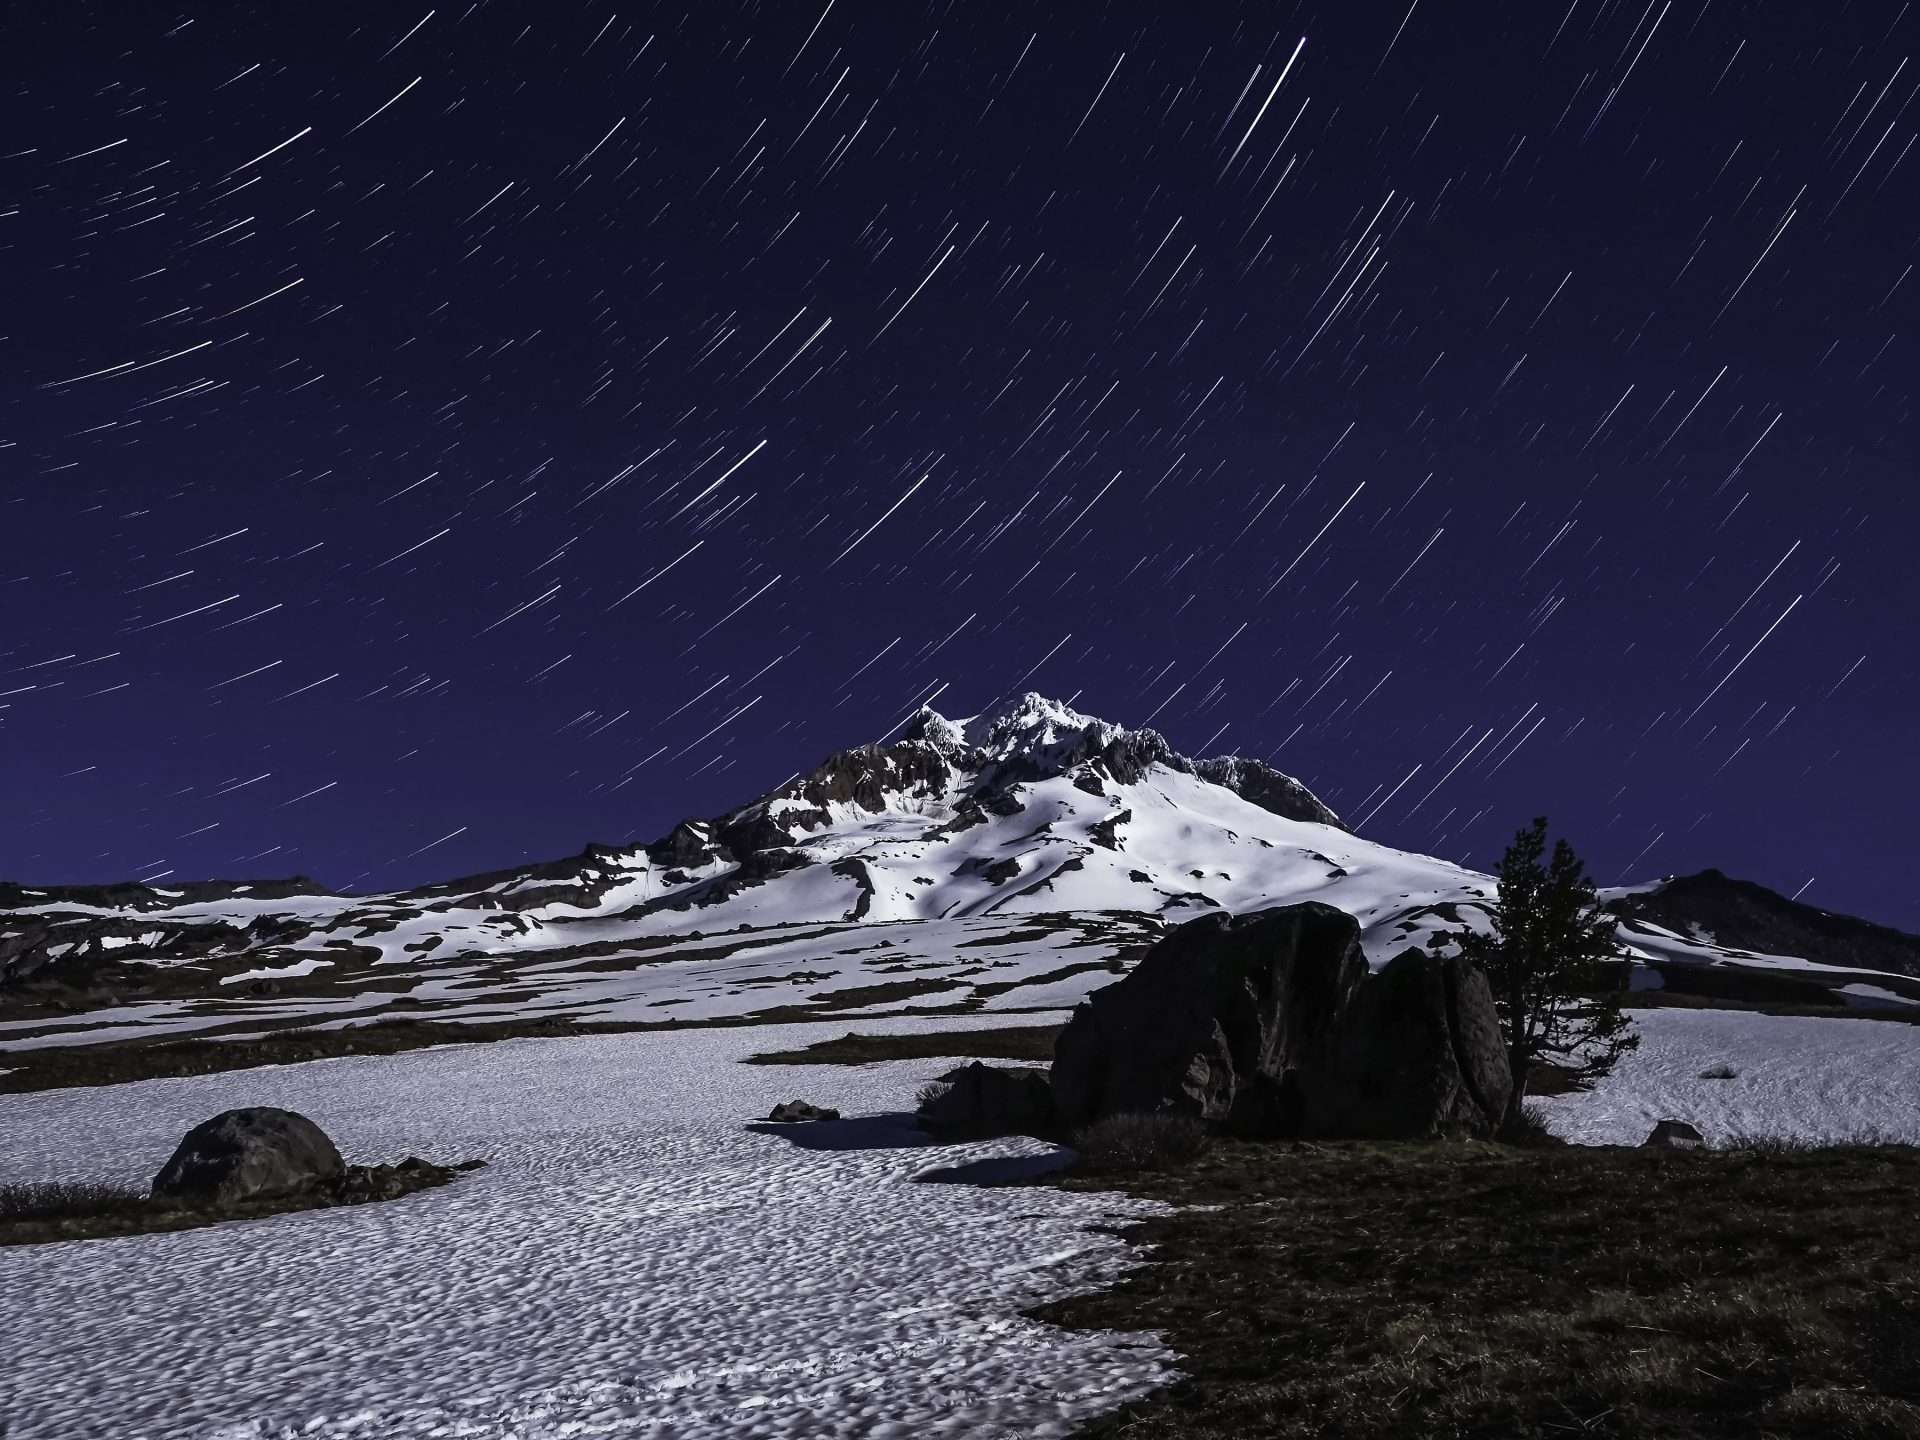 Star trails in a dark night sky appear above a snowy mountain peak.